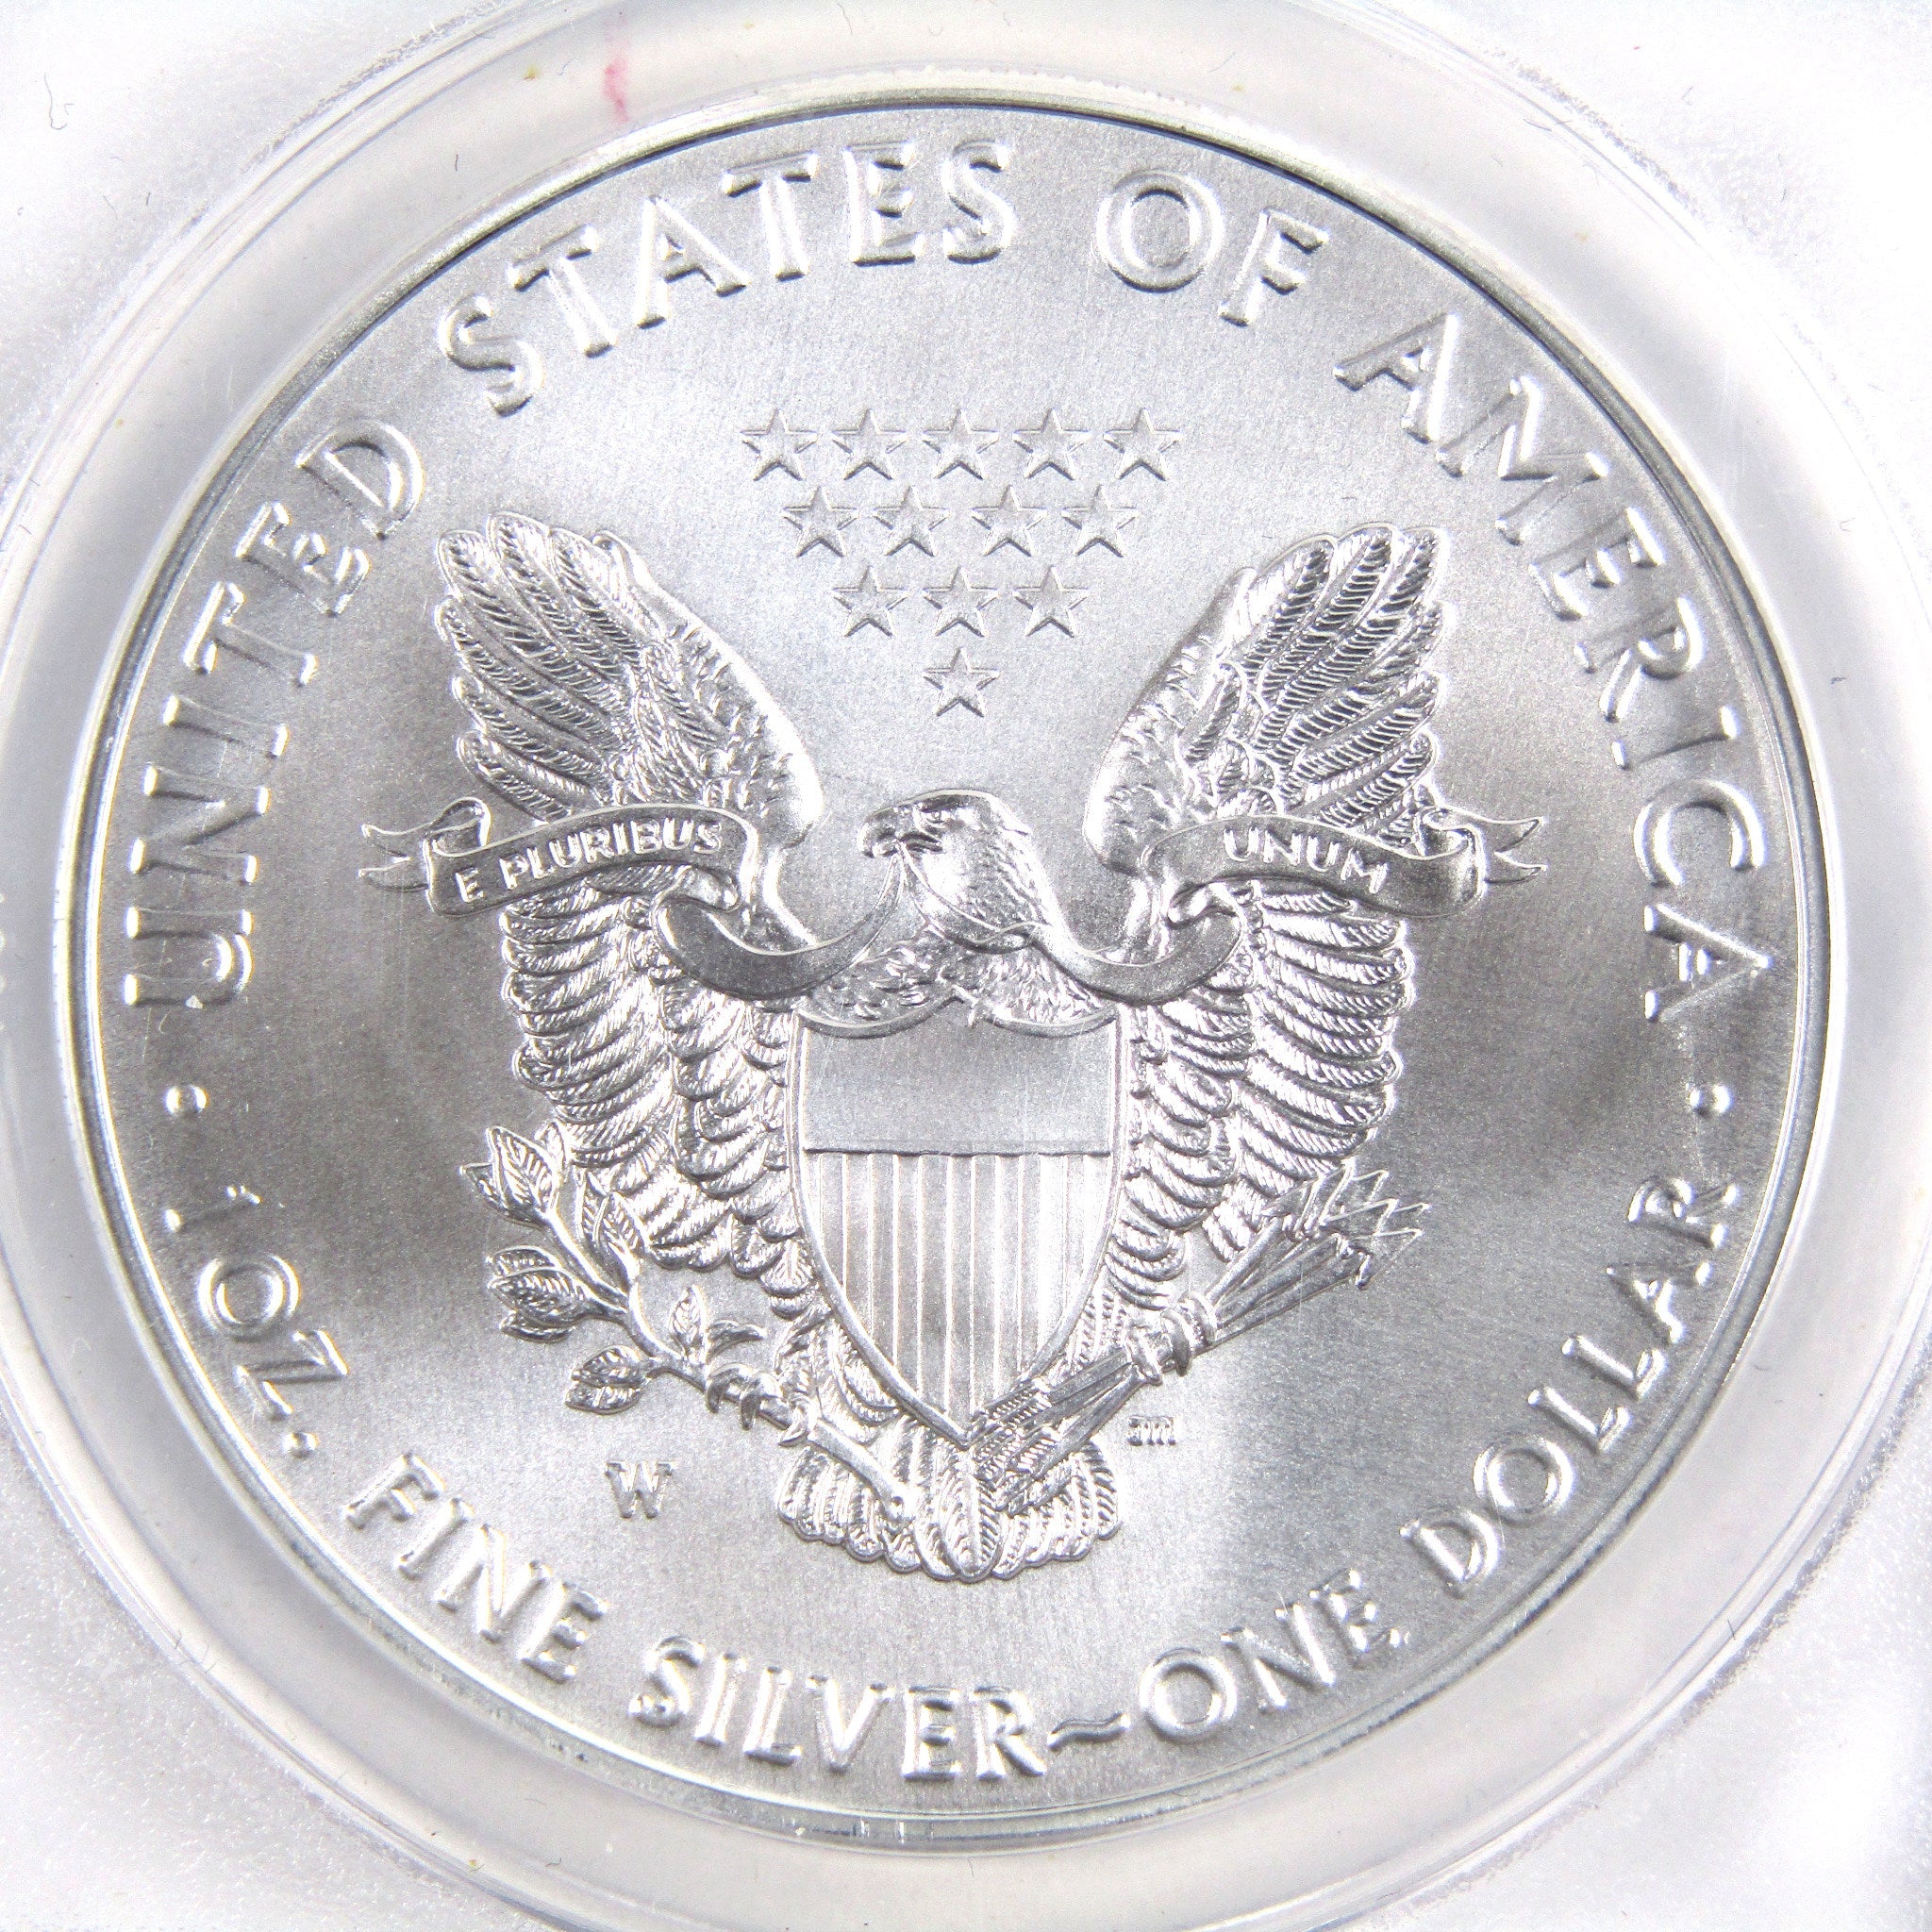 2017 W American Eagle Dollar SP 70 ANACS Silver Burnished SKU:CPC1842